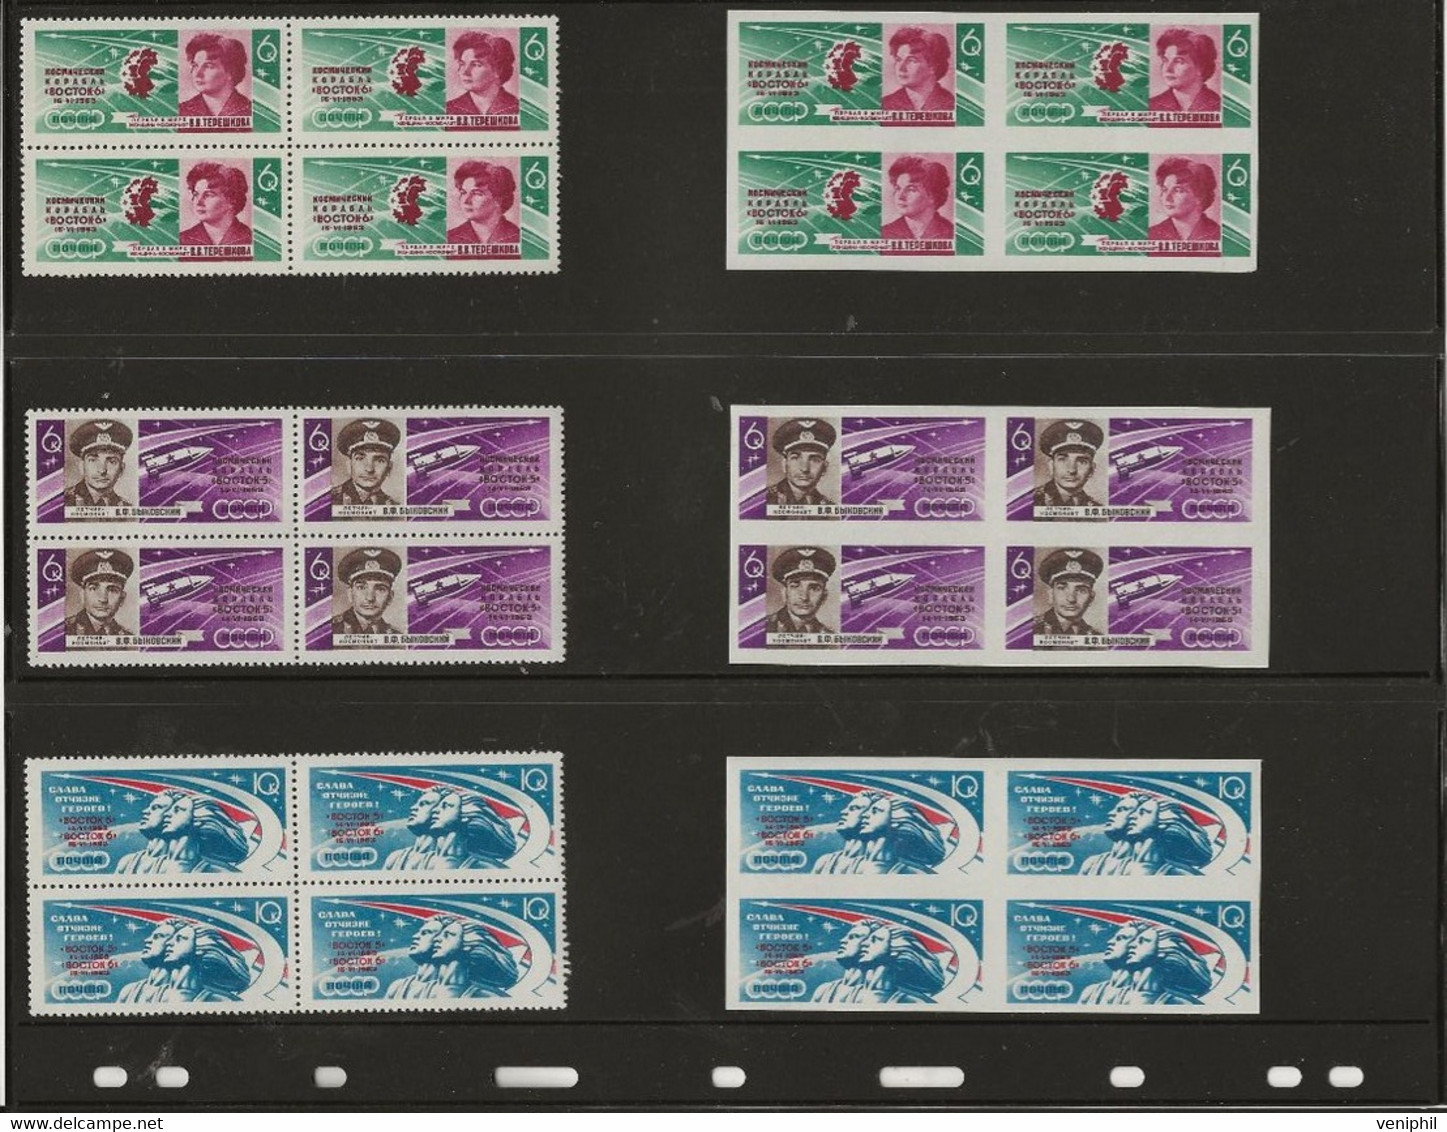 RUSSIE - SERIE COSMOS N° 2681 A 2683 - BLOC DE 4 NEUF SANS CHARNIERE DENTELE ET NON DENTELE -ANNEE 1963 - Unused Stamps